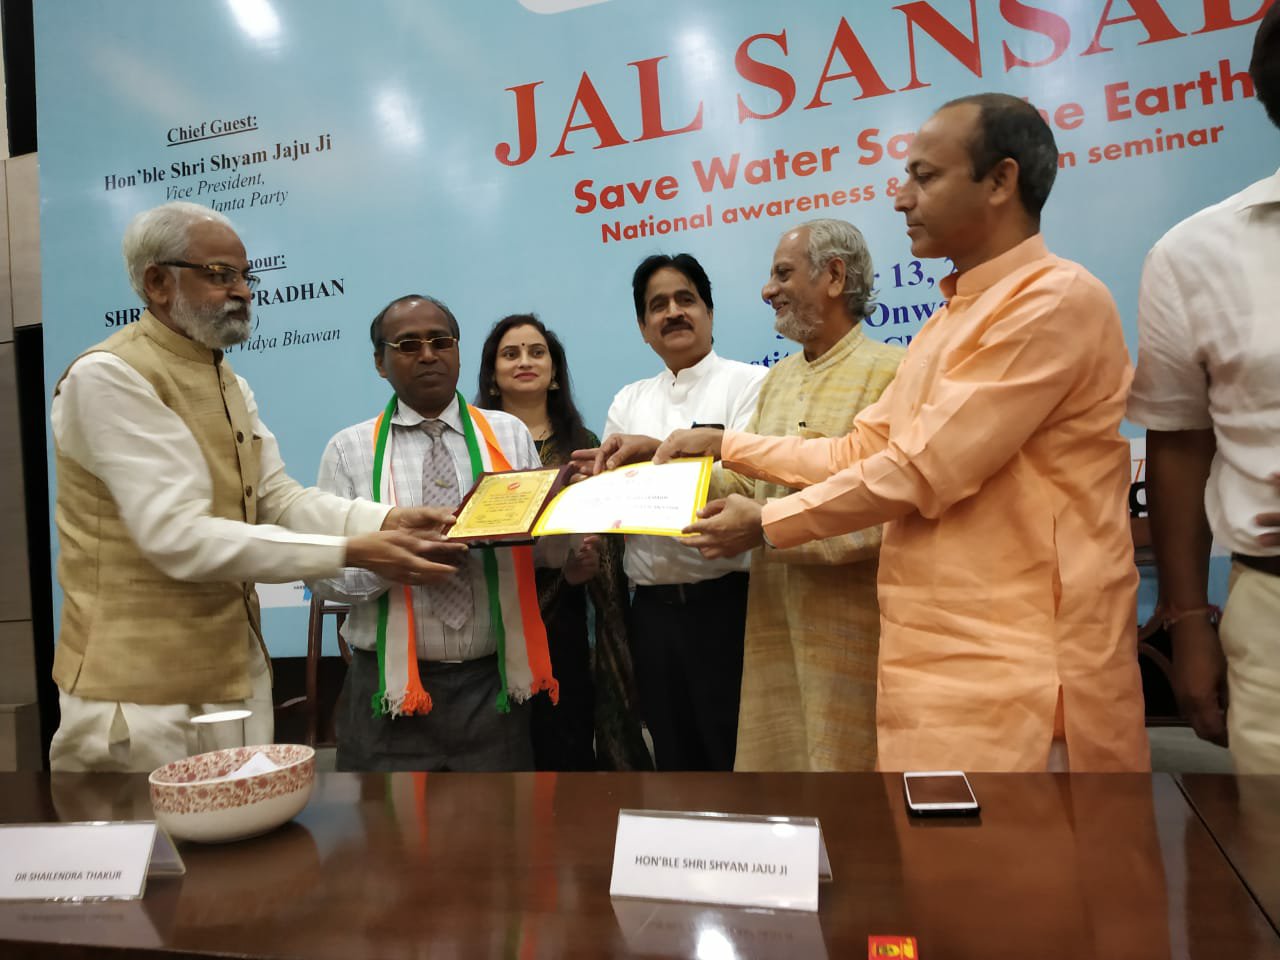 गोपाल किरन समाज सेवी संस्था को दिल्ली में मिला सजग जल प्रहरी सम्मान | New India Times